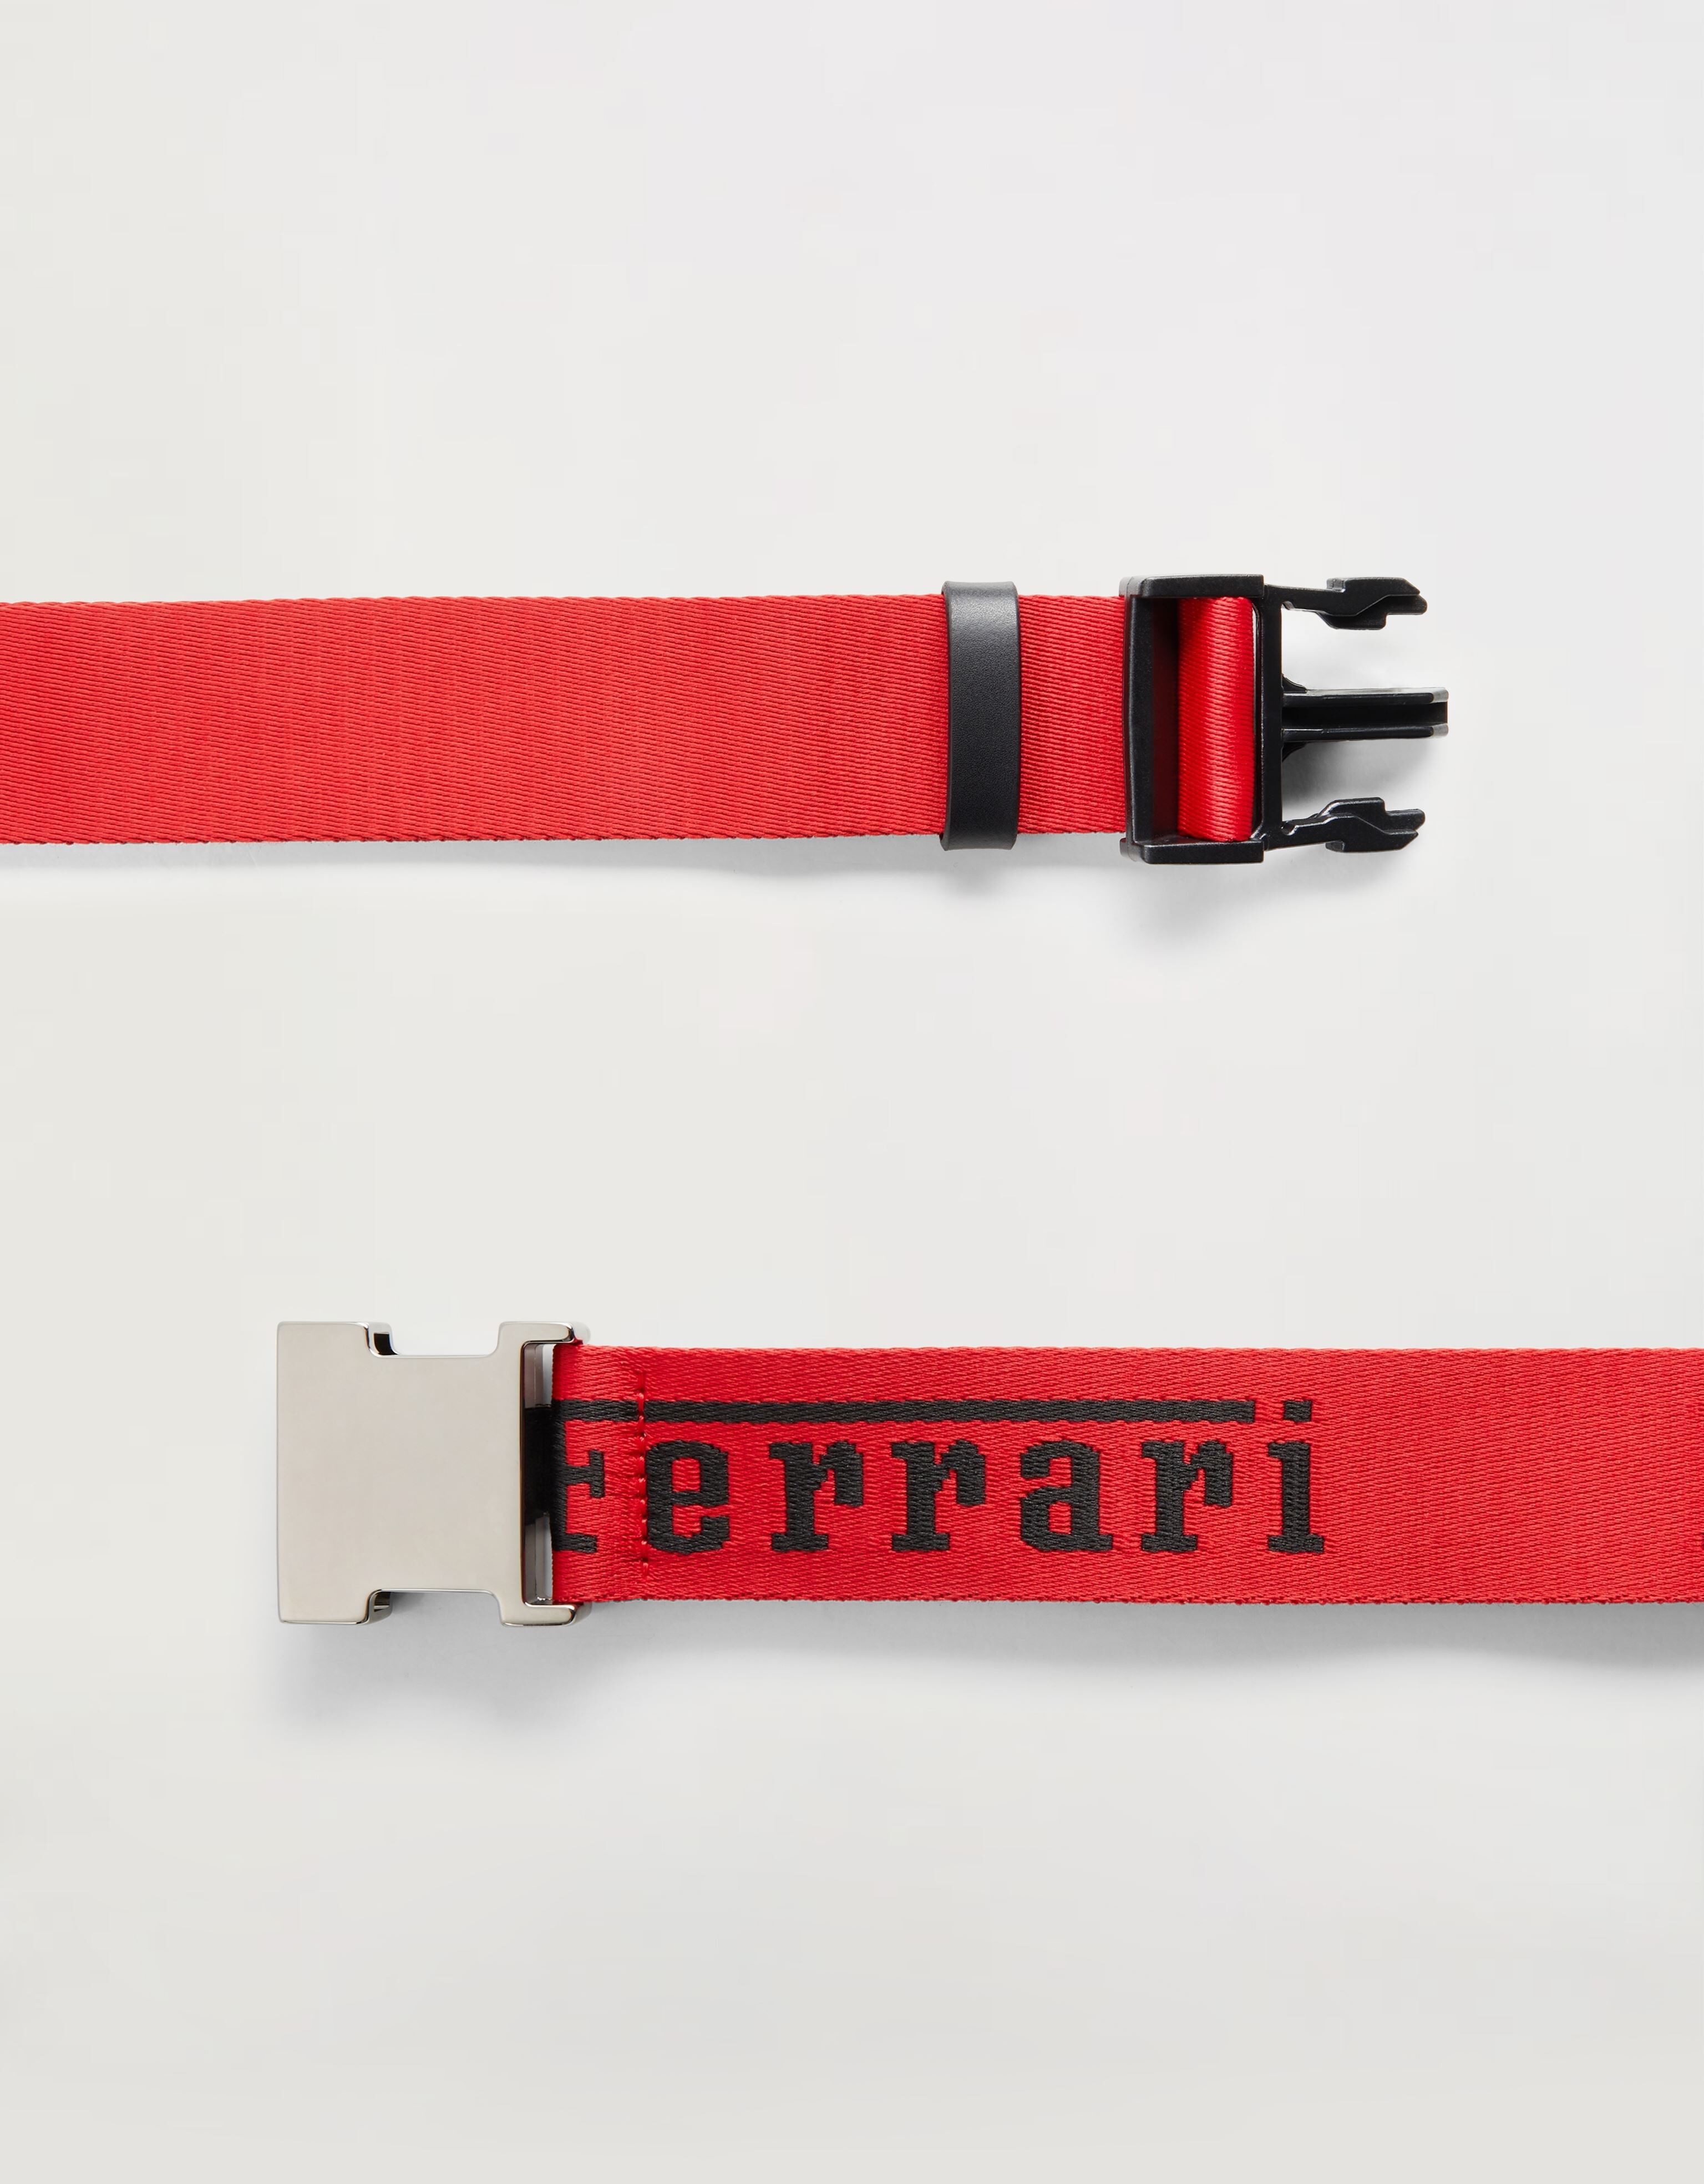 Ferrari Cinturón de cinta con el logotipo de Ferrari Rosso Corsa 20017f